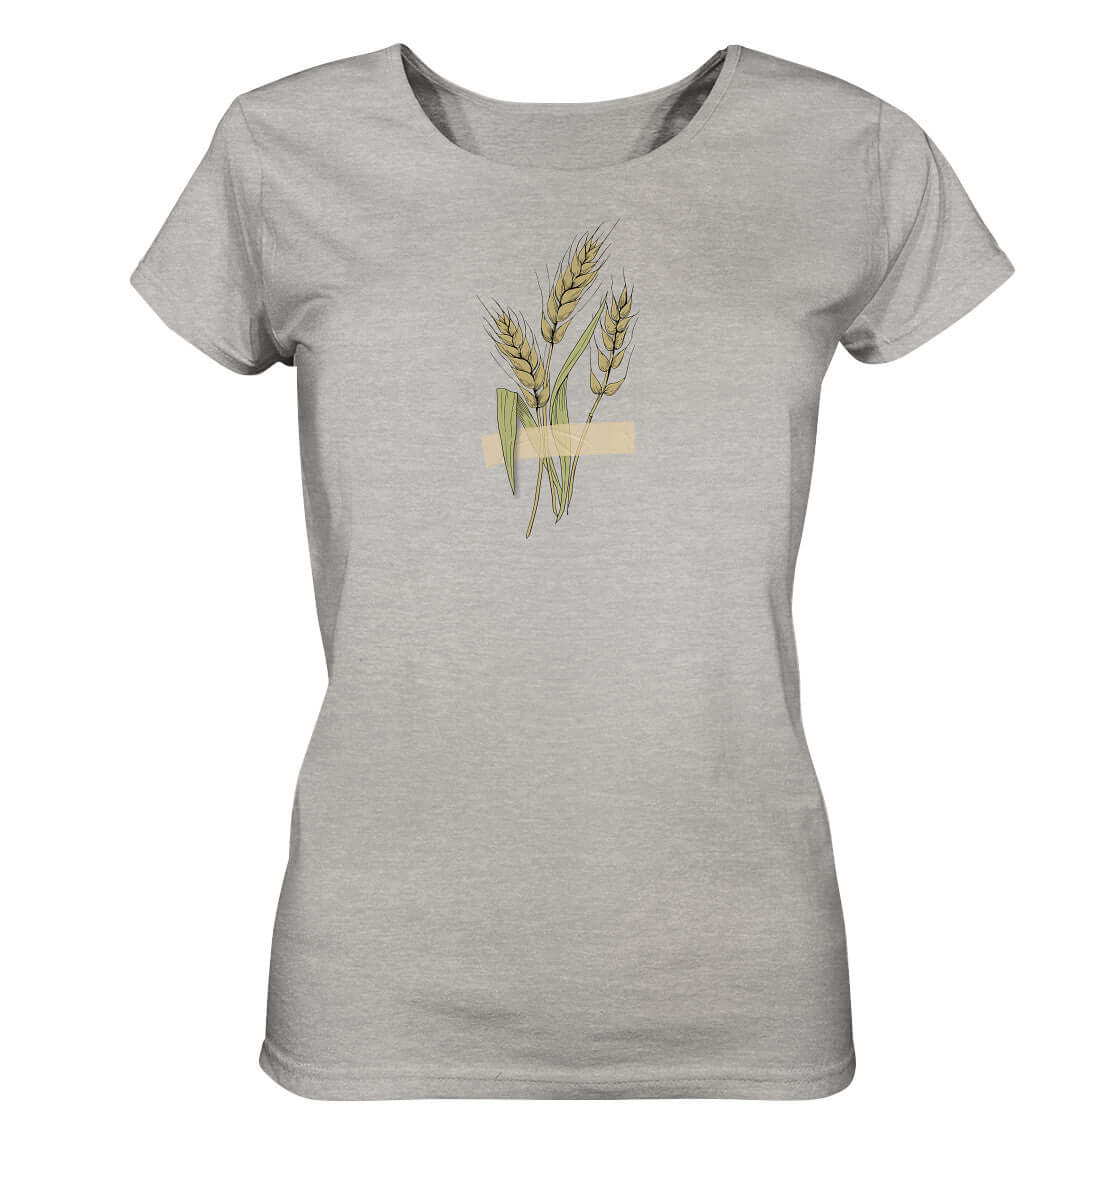 Shirt Ährenfrau Weizen Getreide Landwirtin Shirt Landwirtschaft Dorfkram® grau